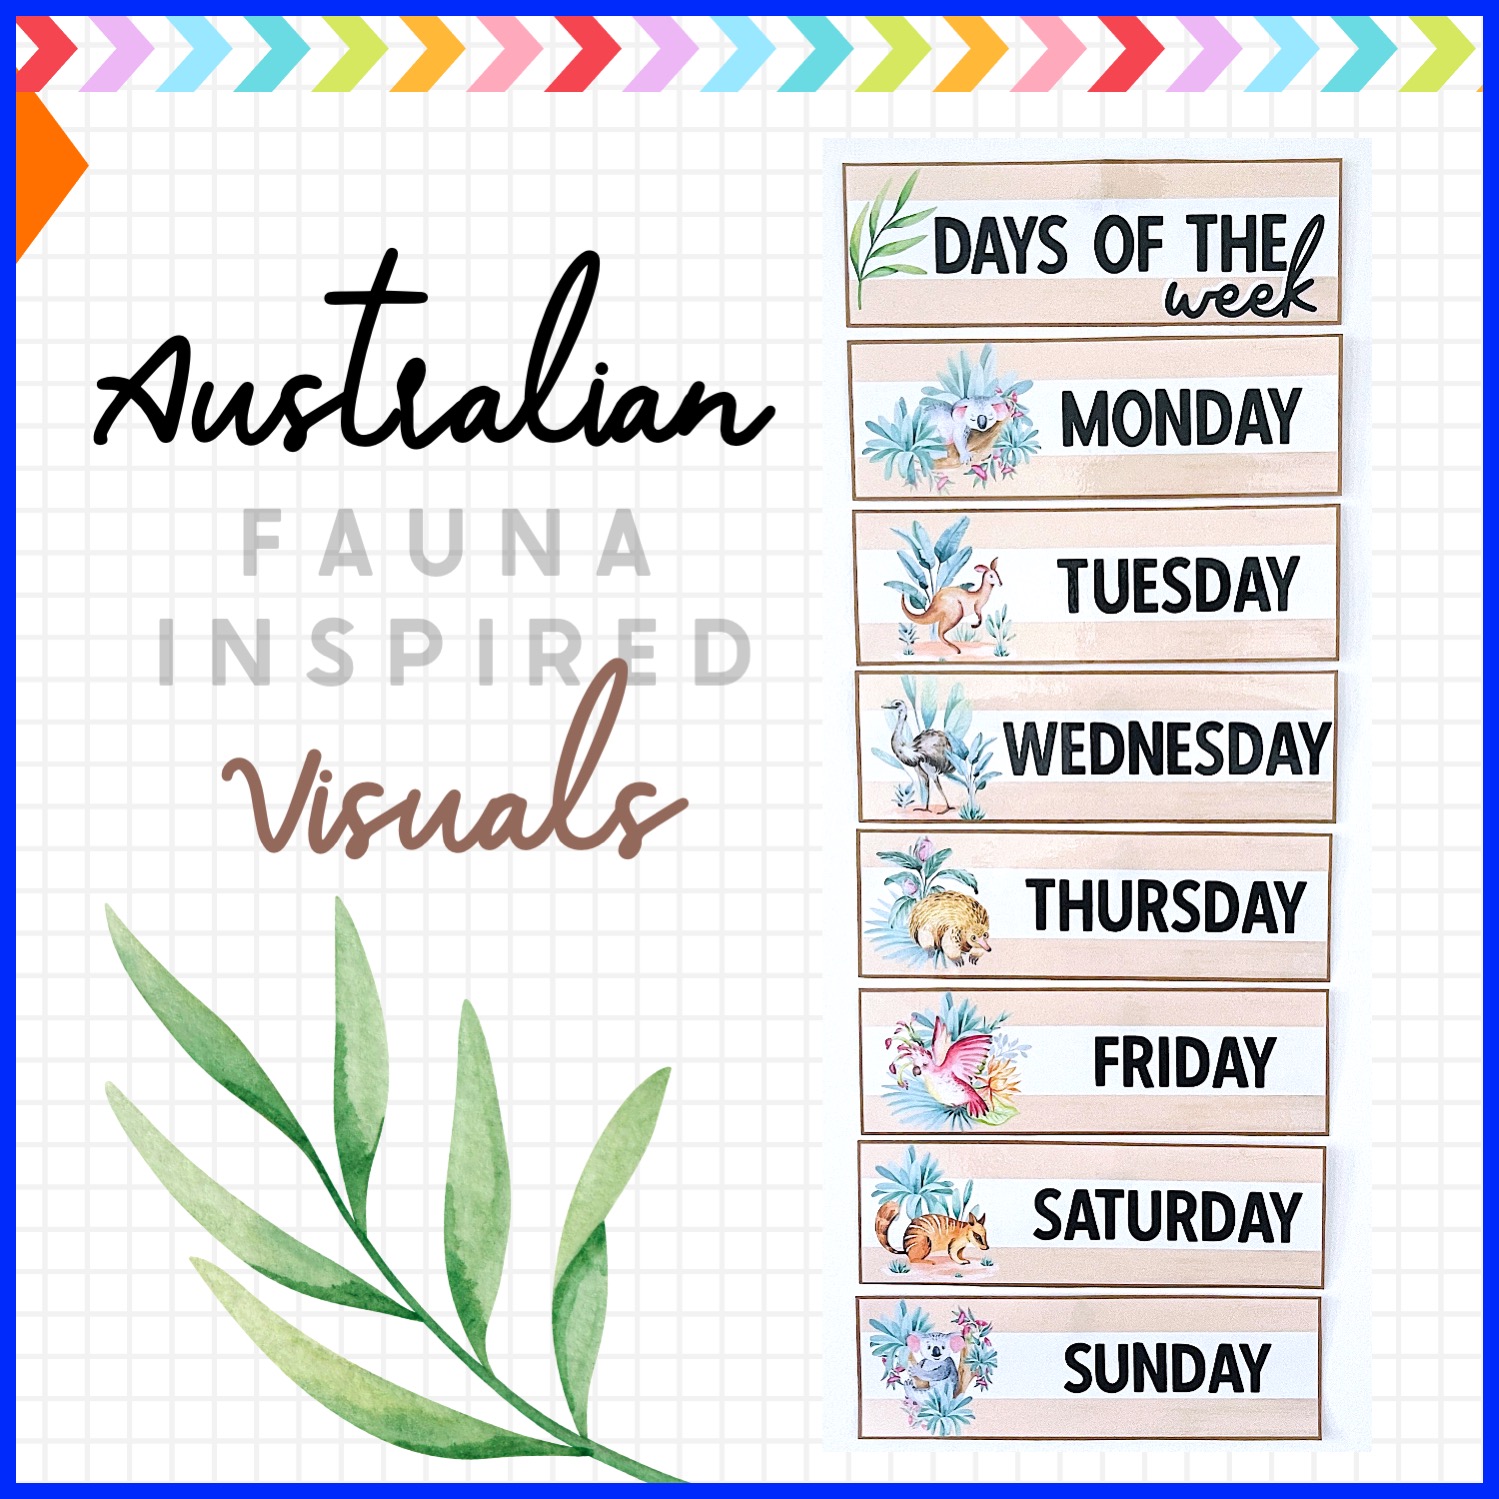 Australian Fauna Days of the week cards - Australian Teachers Marketplace